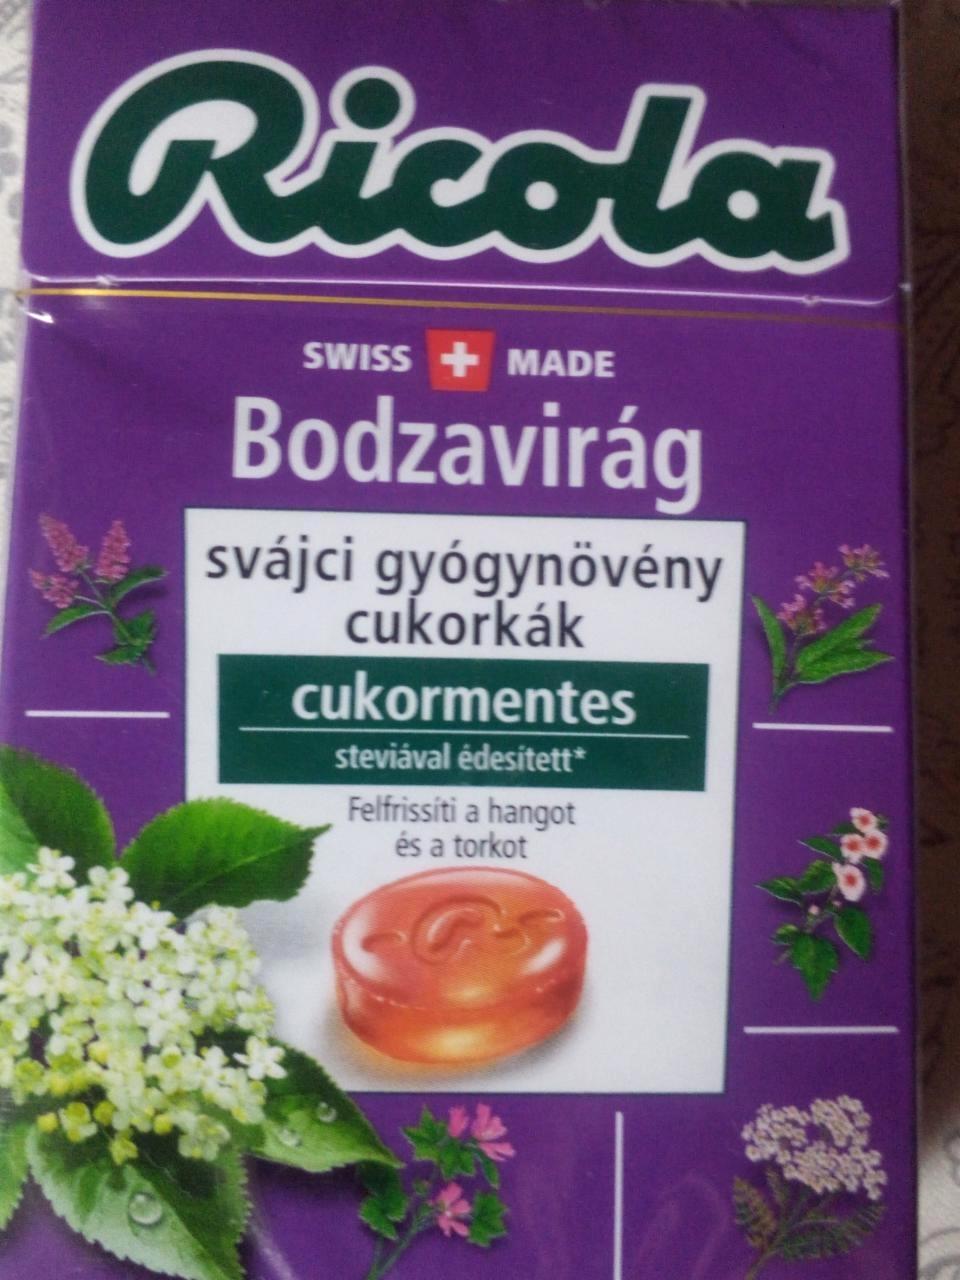 Képek - Bodzavirág svájci gyógynövény cukorkák cukormentes Ricola